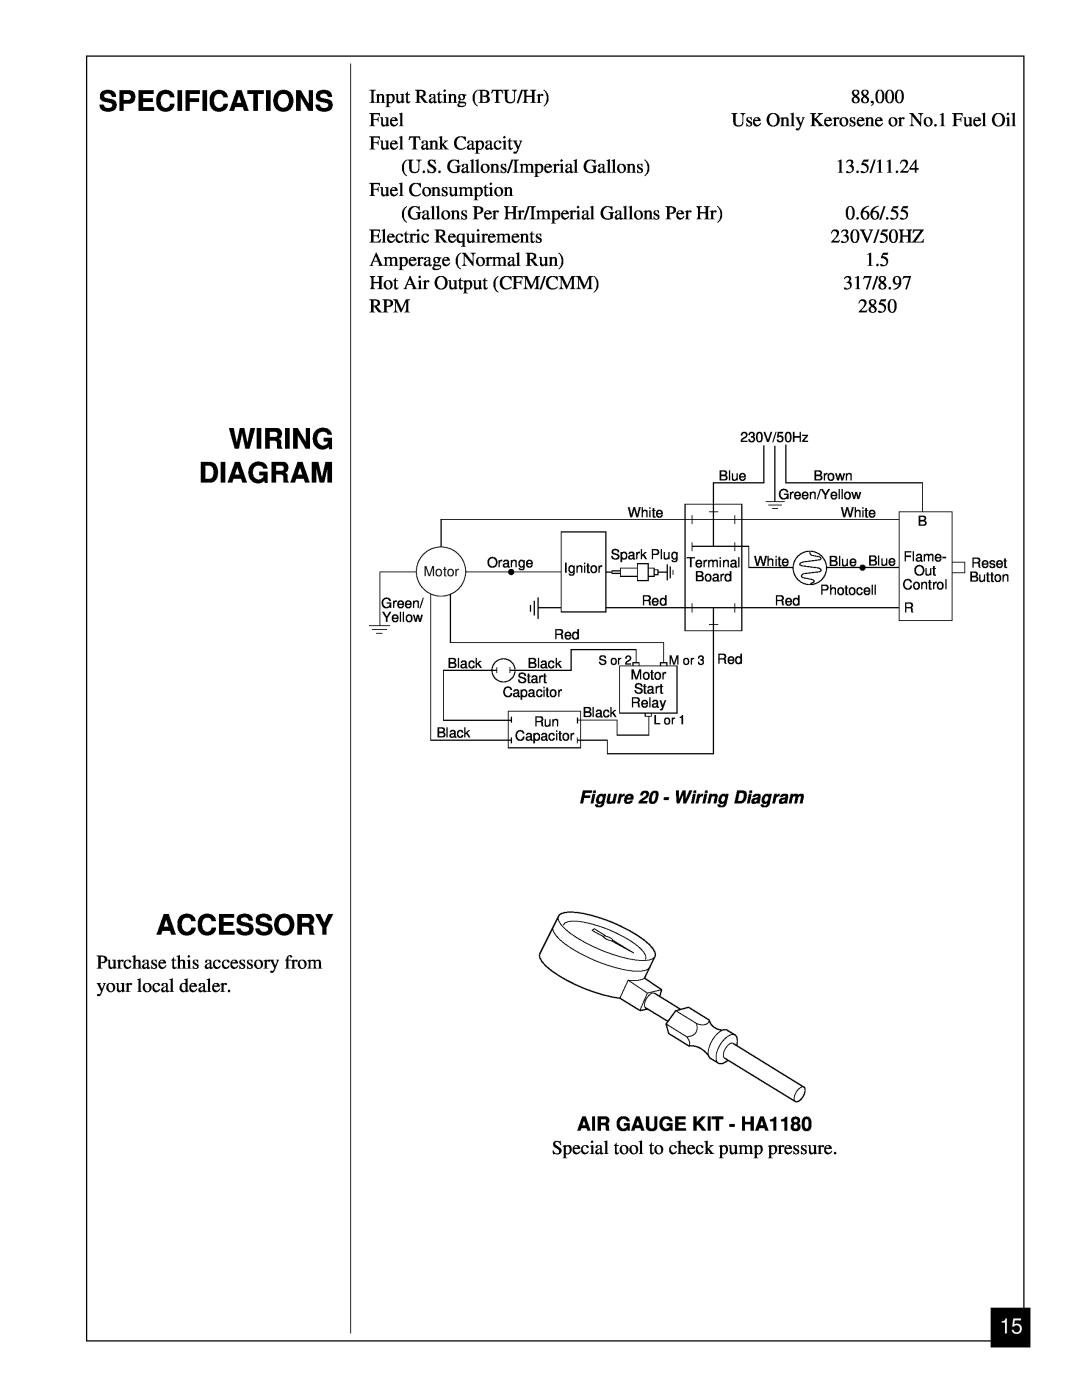 Desa RV125EDI owner manual Specifications Wiring Diagram Accessory, AIR GAUGE KIT - HA1180 